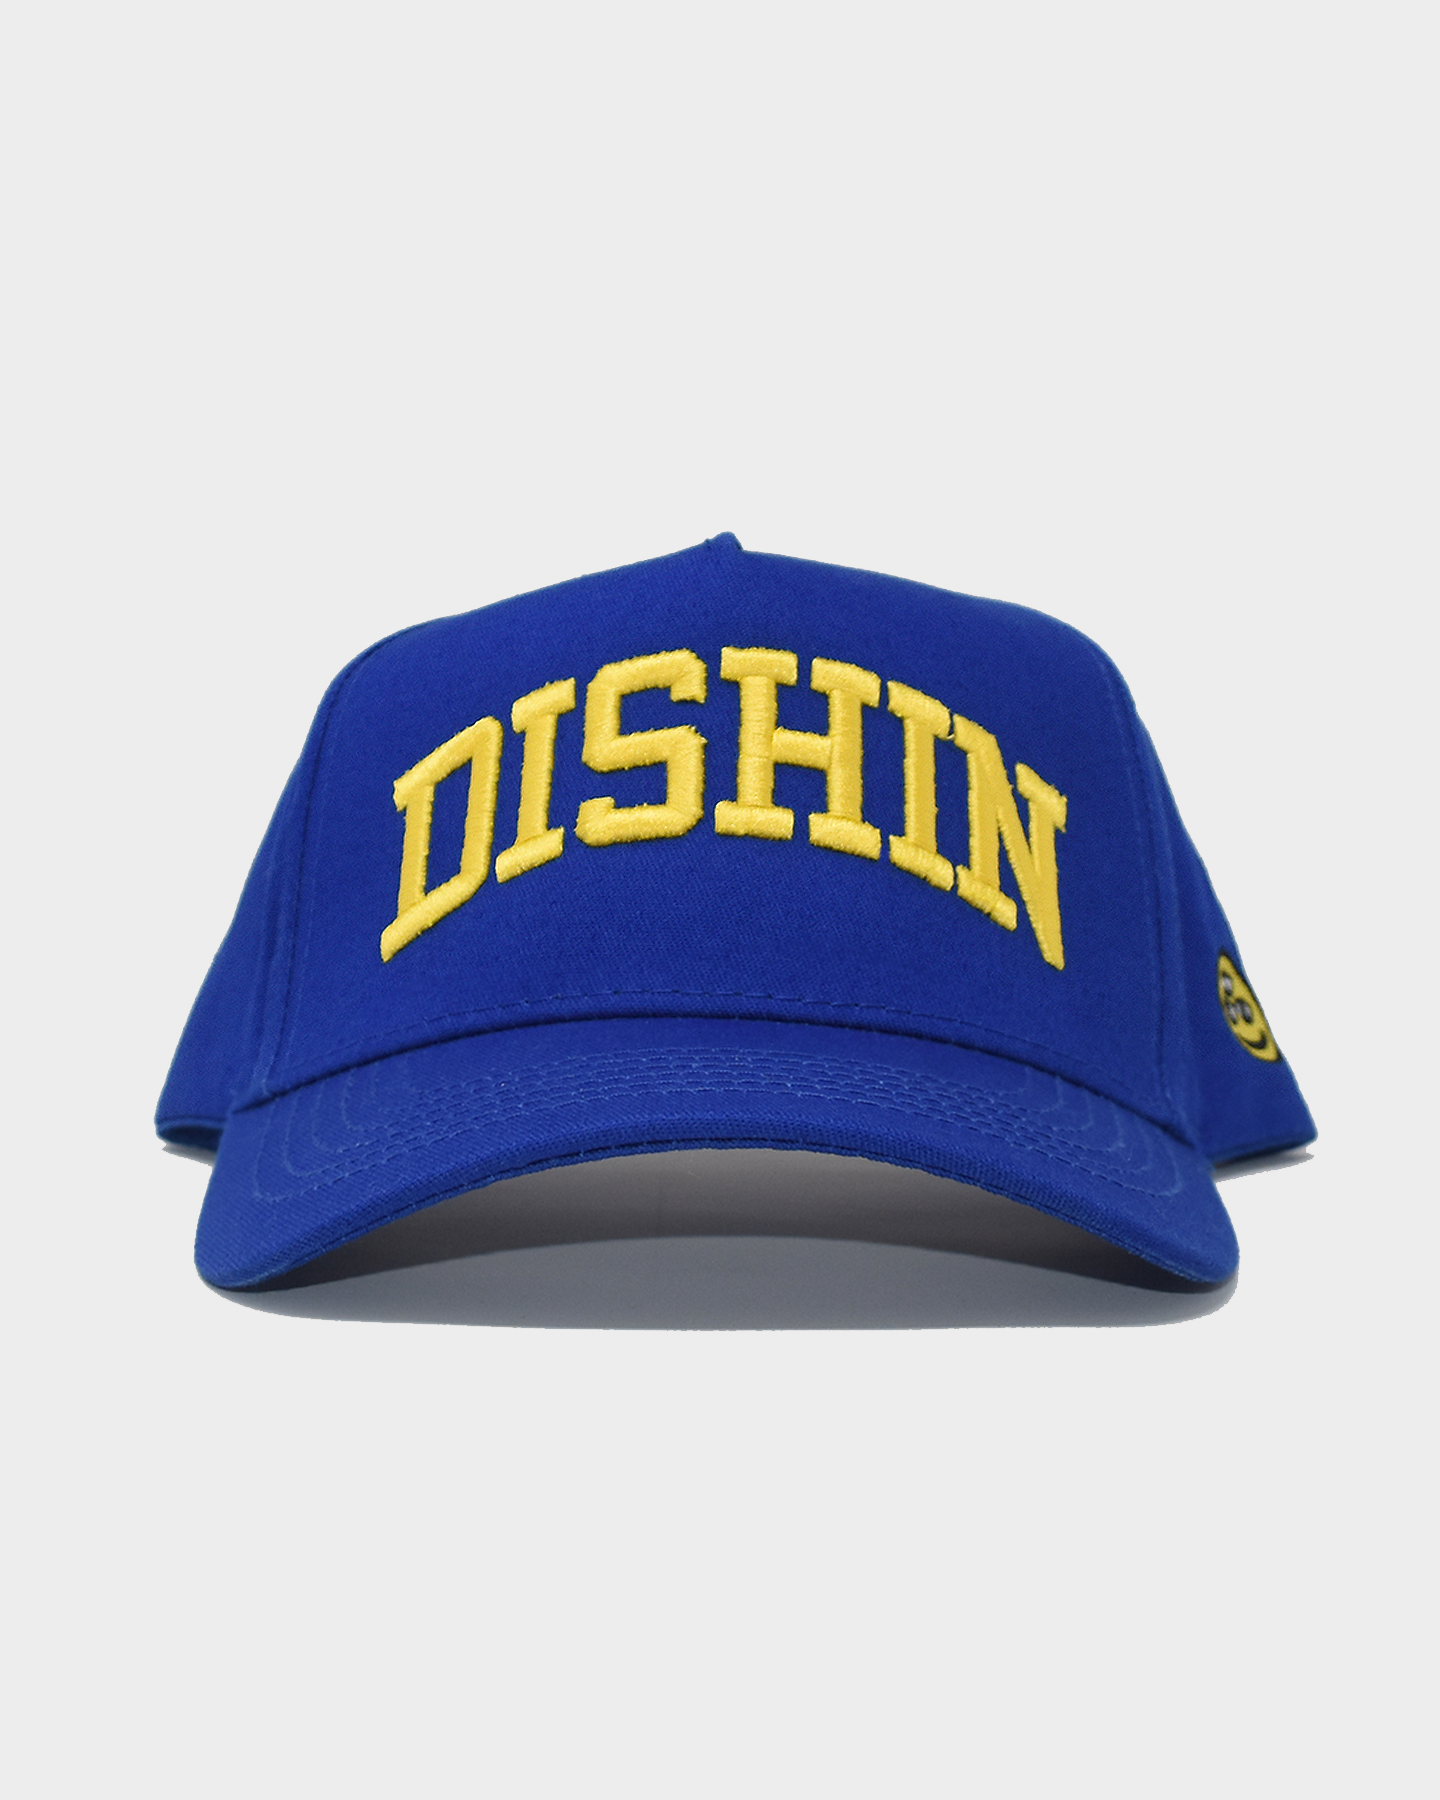 Dishin Hat (Royal/Yellow)